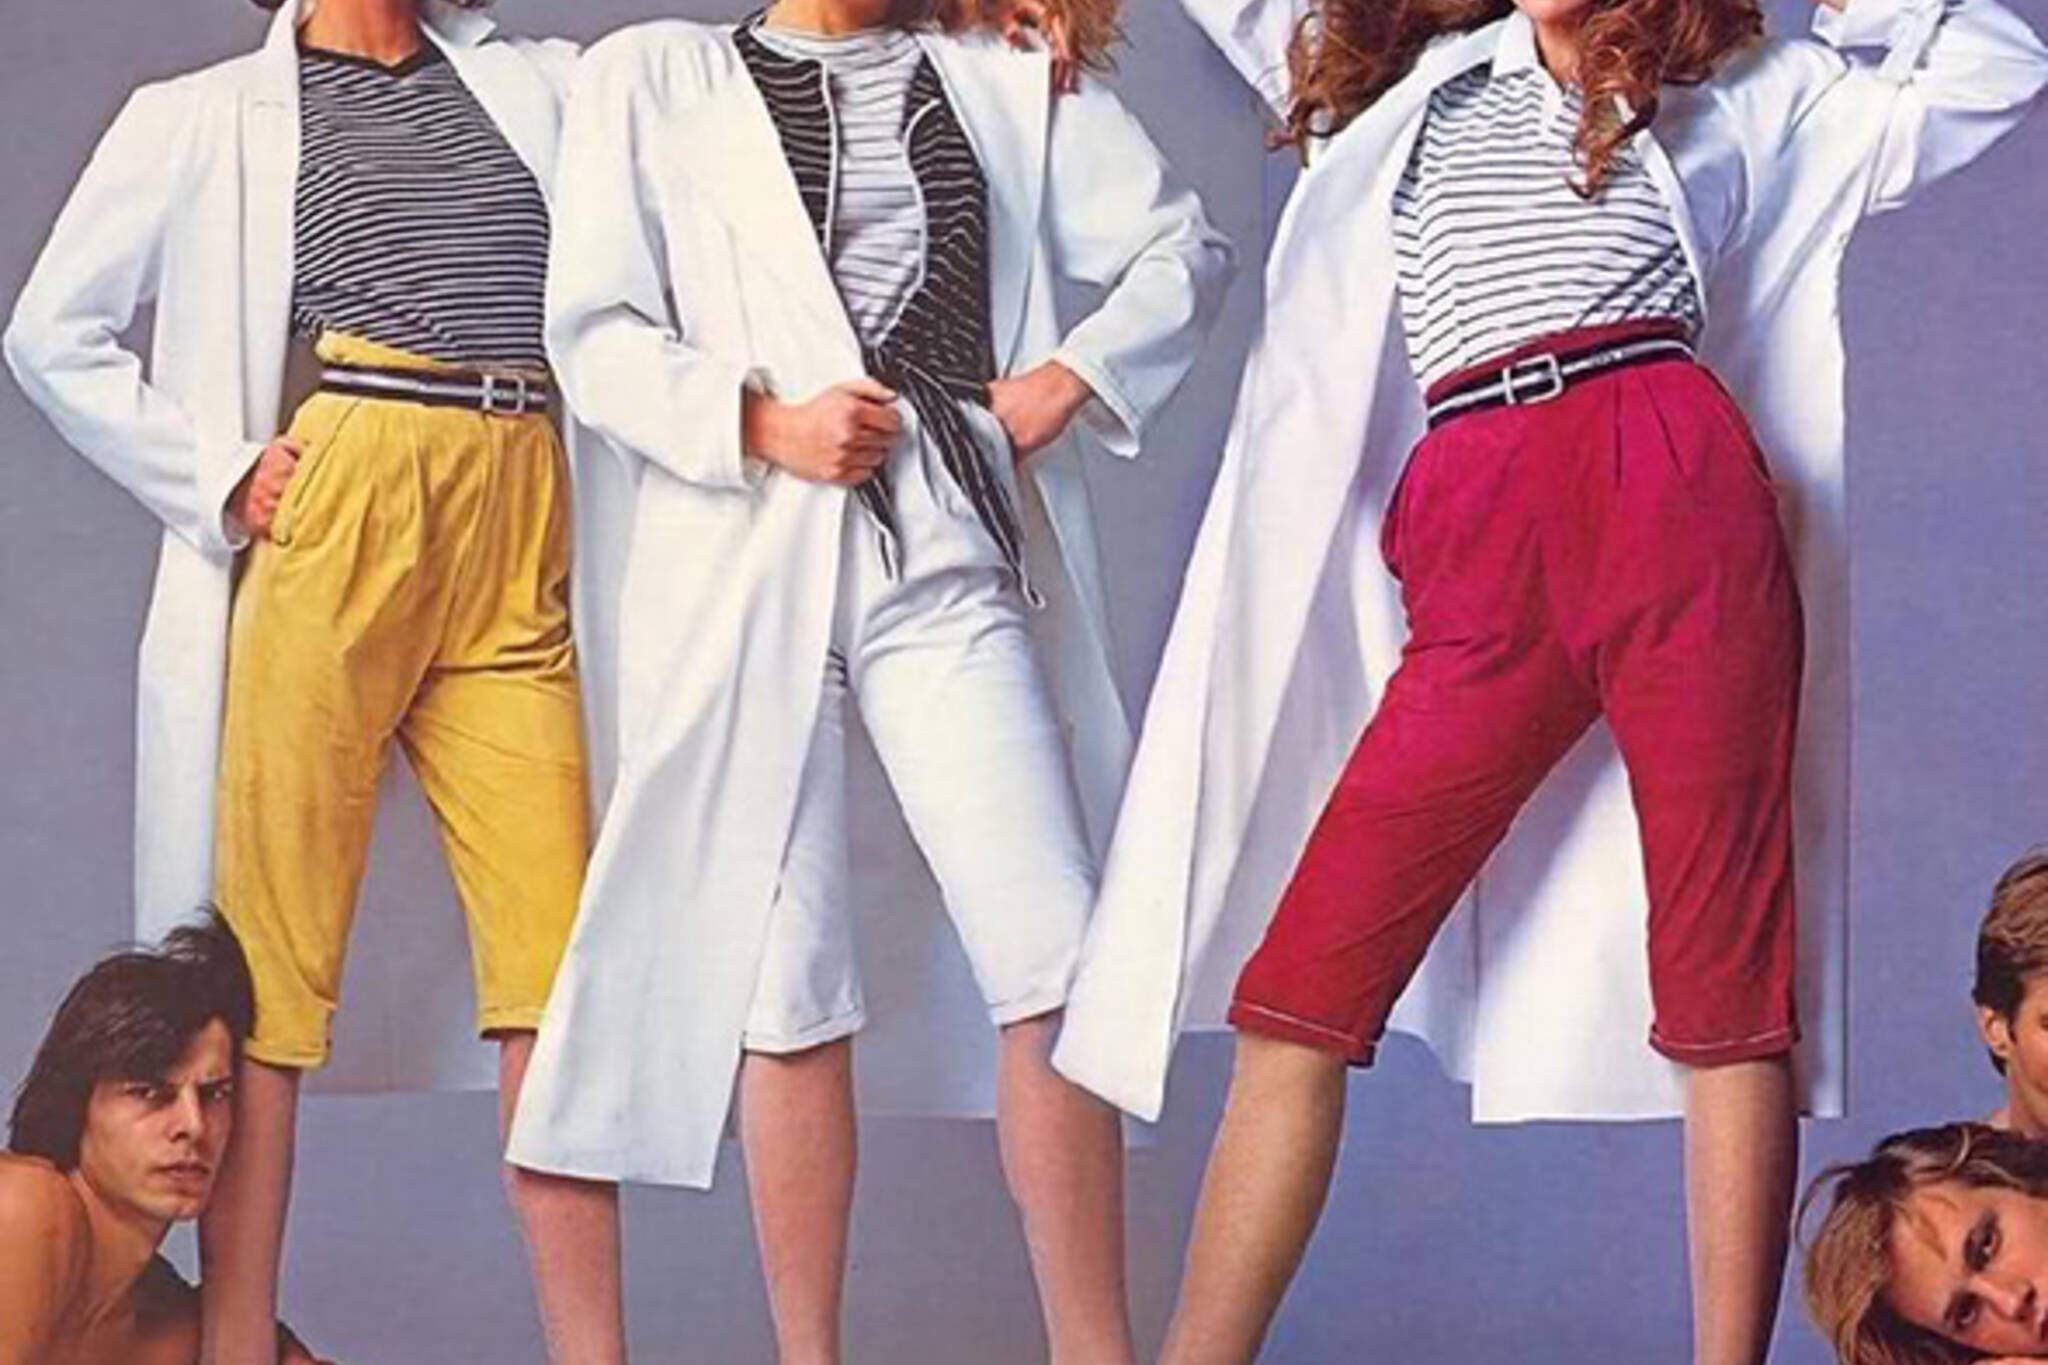 Каверы 80 х. 80-Е Америка мода. 80е стиль одежды в Америке. Мода 1980 Синди Кроуфорд. Стиль 80х одежда элита.